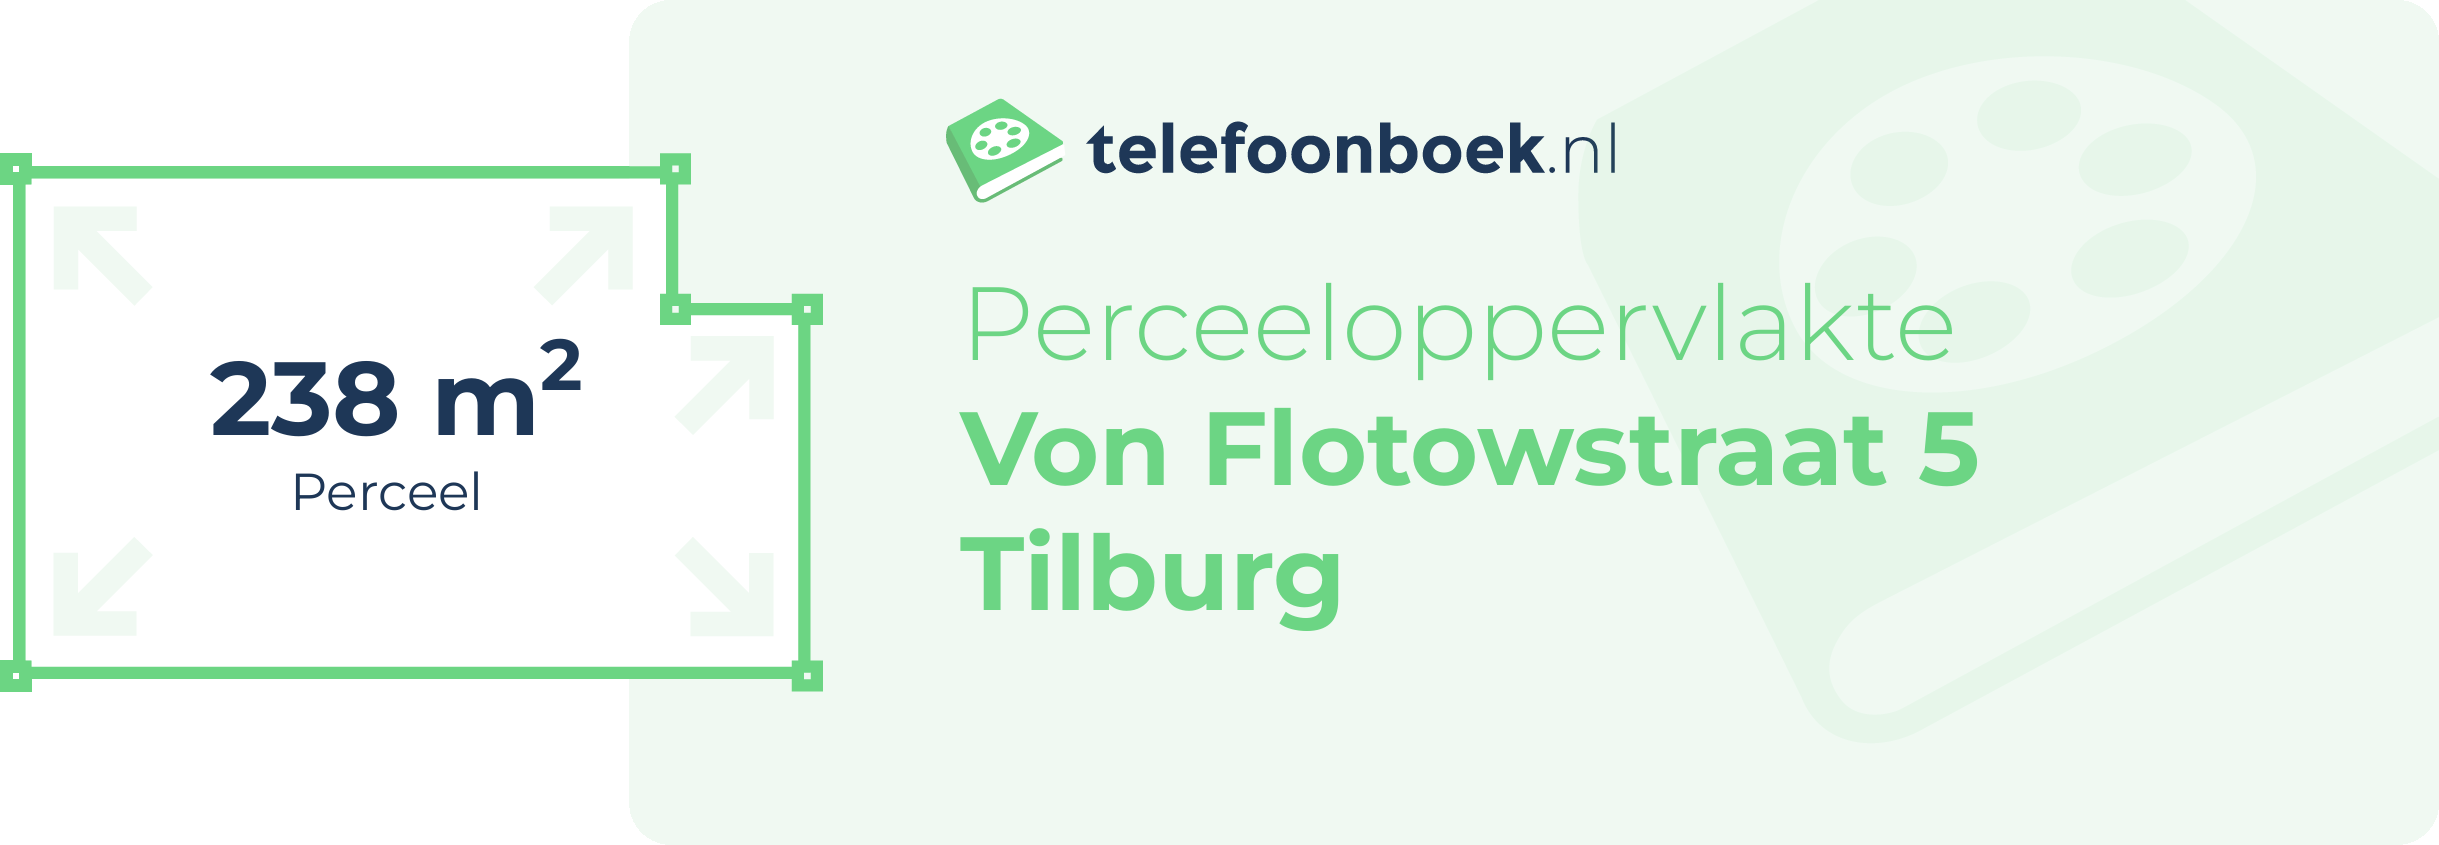 Perceeloppervlakte Von Flotowstraat 5 Tilburg